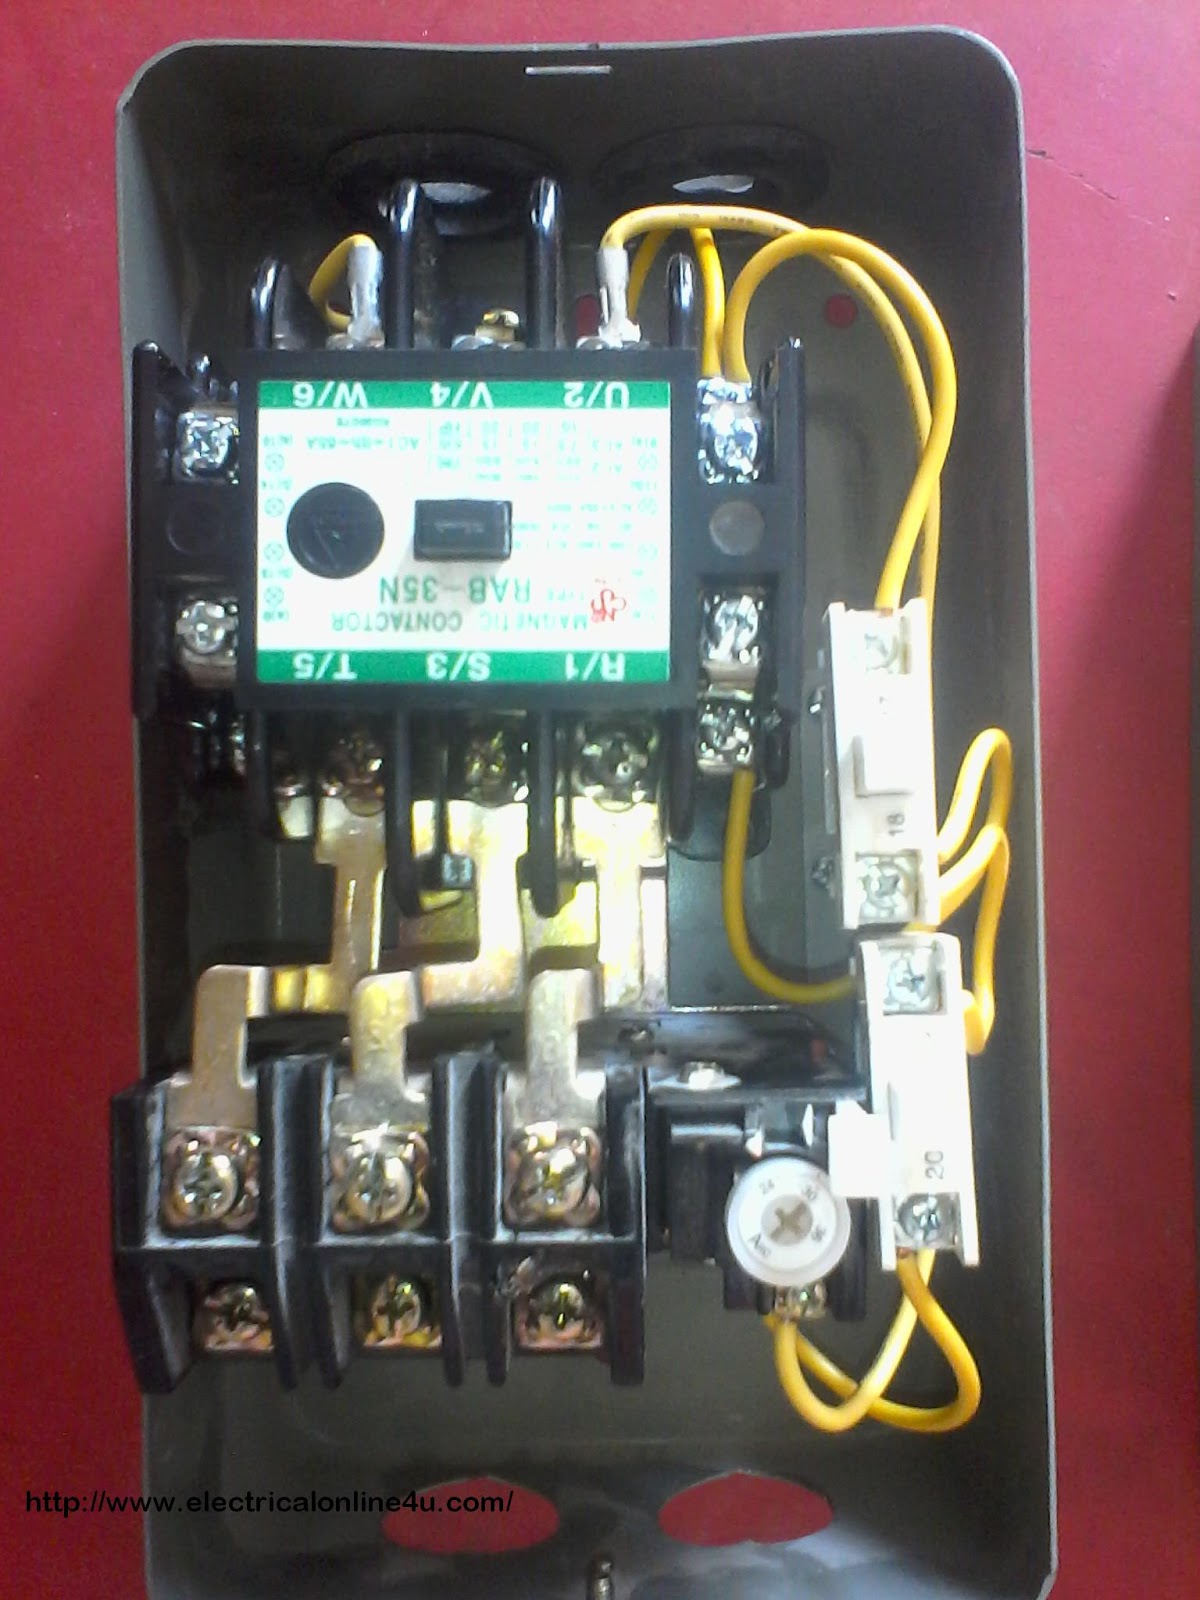 661cj030-a contactor wiring diagram